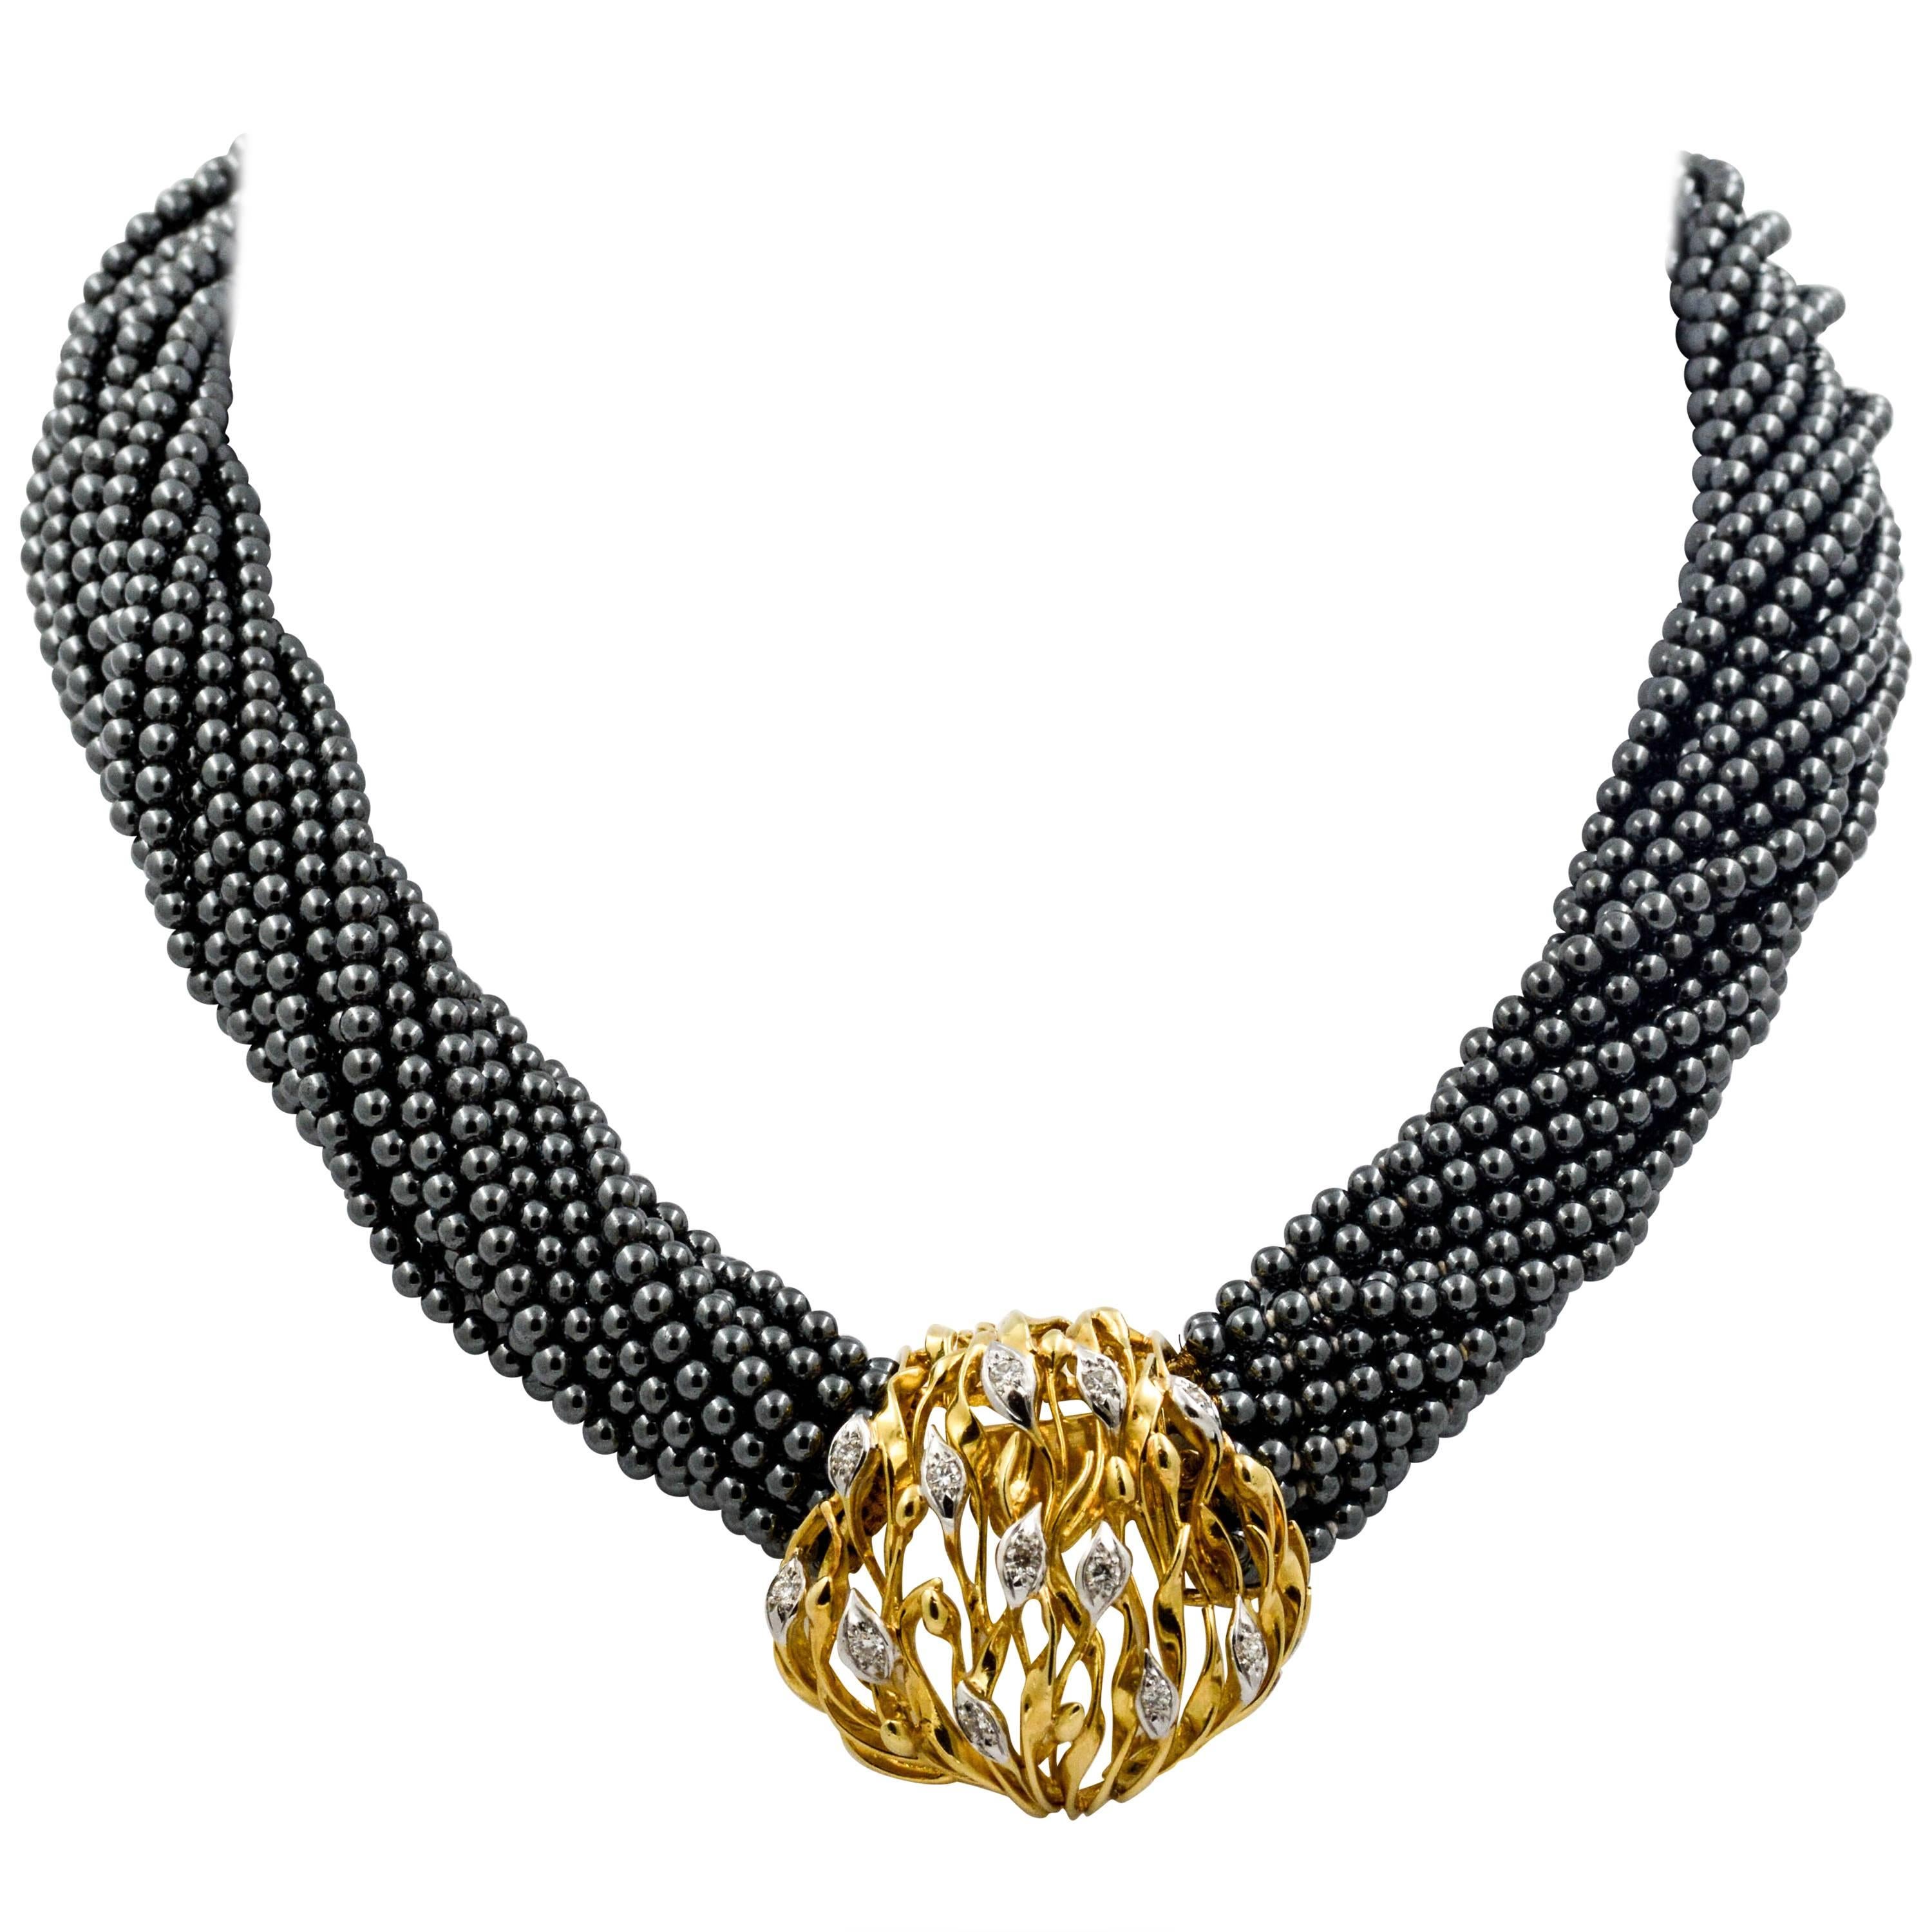 Hematite Torsade Necklace with 0.75 ct Diamond Gold Clasp